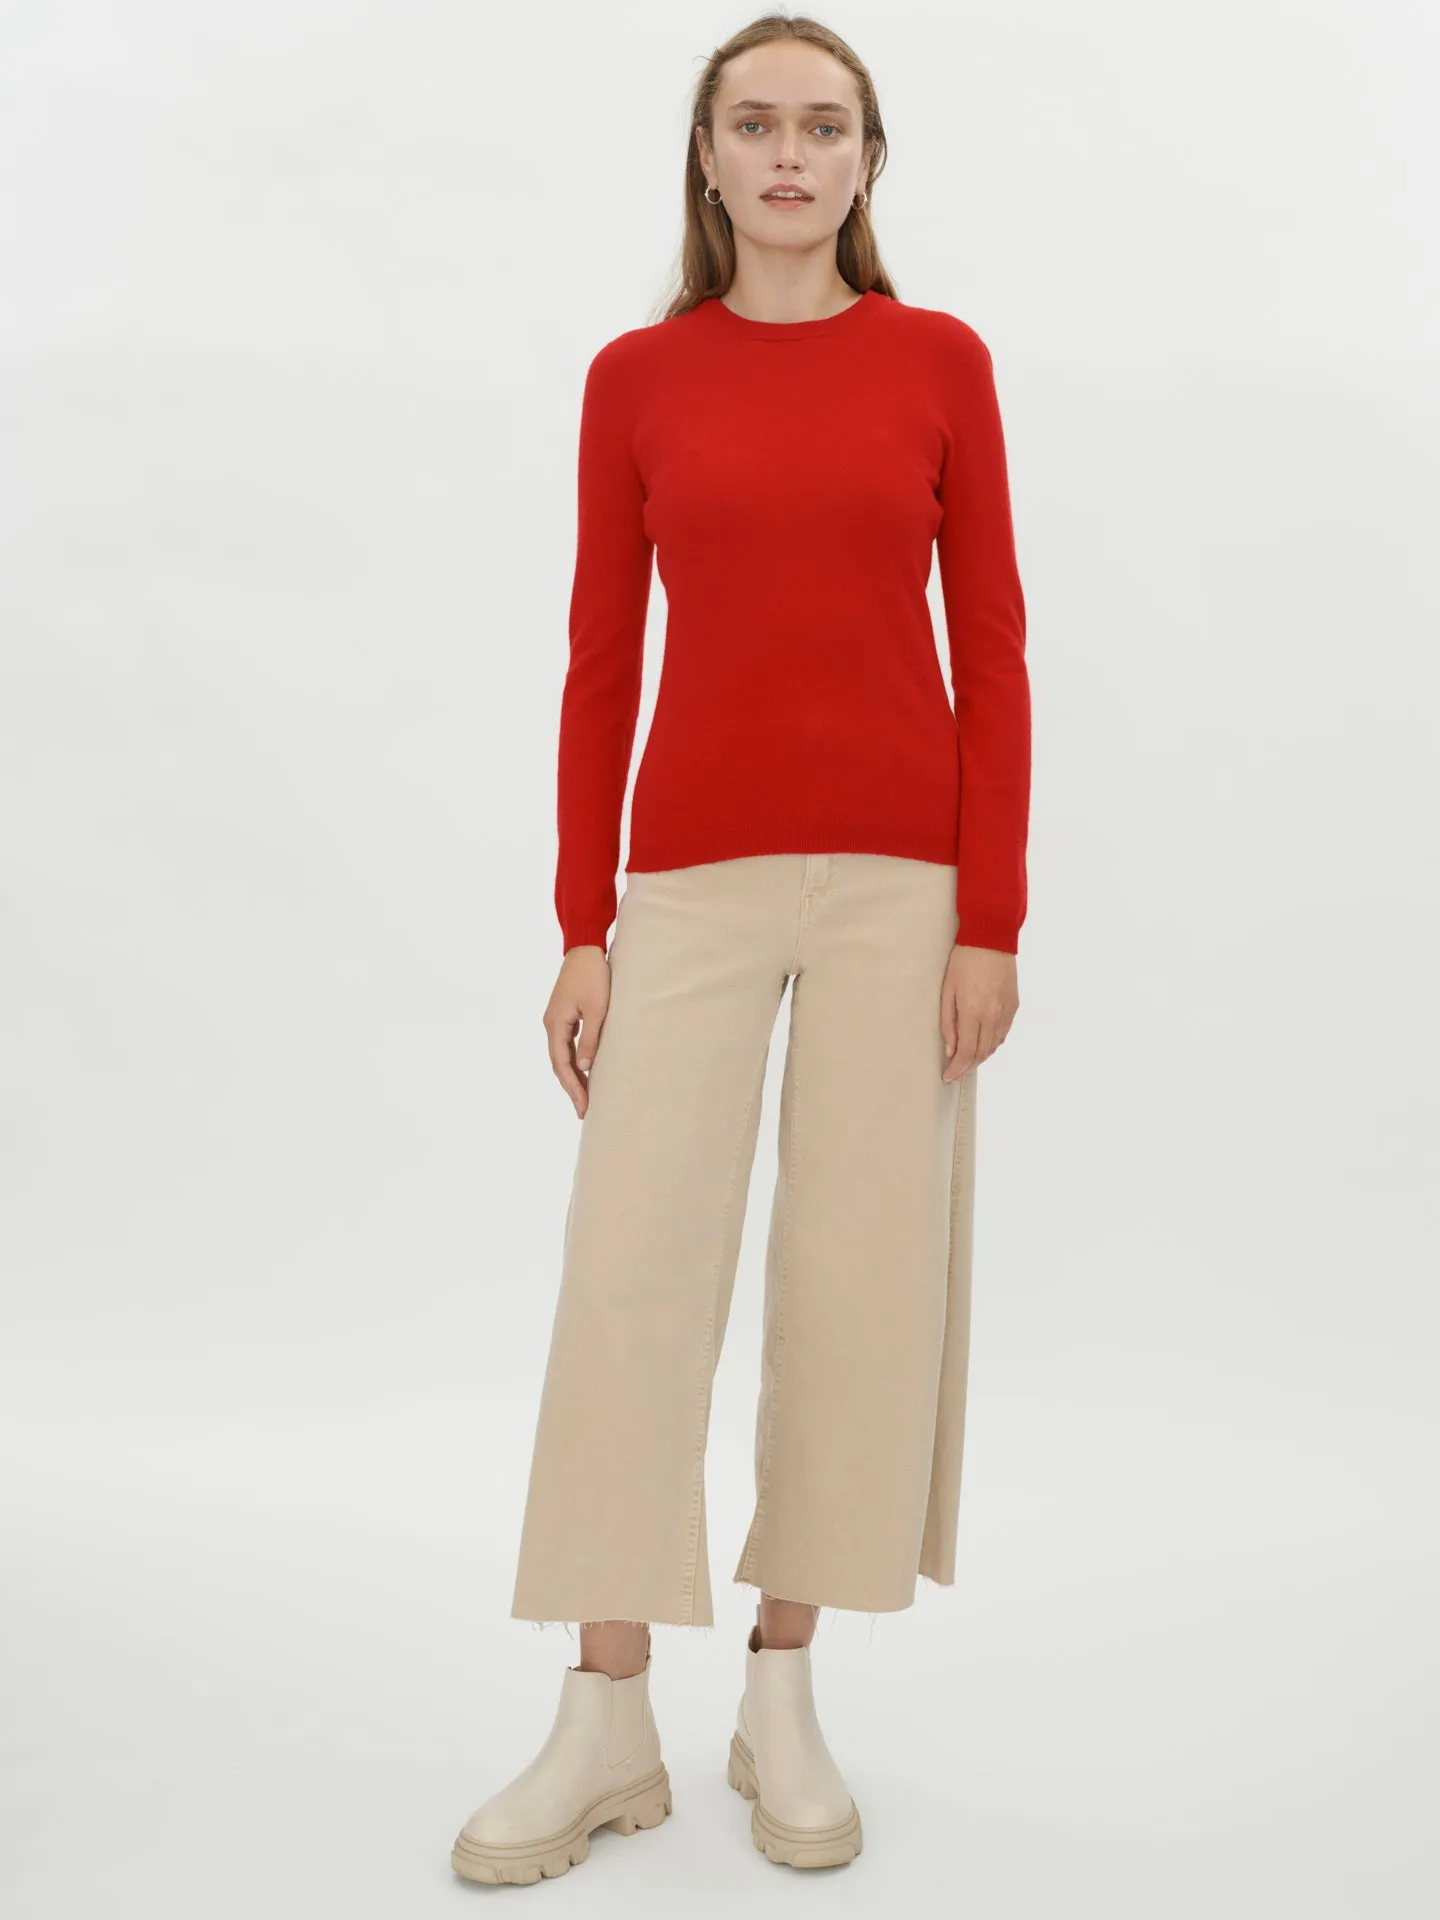 Women's Basic Crew Neck Sweater Red - Gobi Cashmere